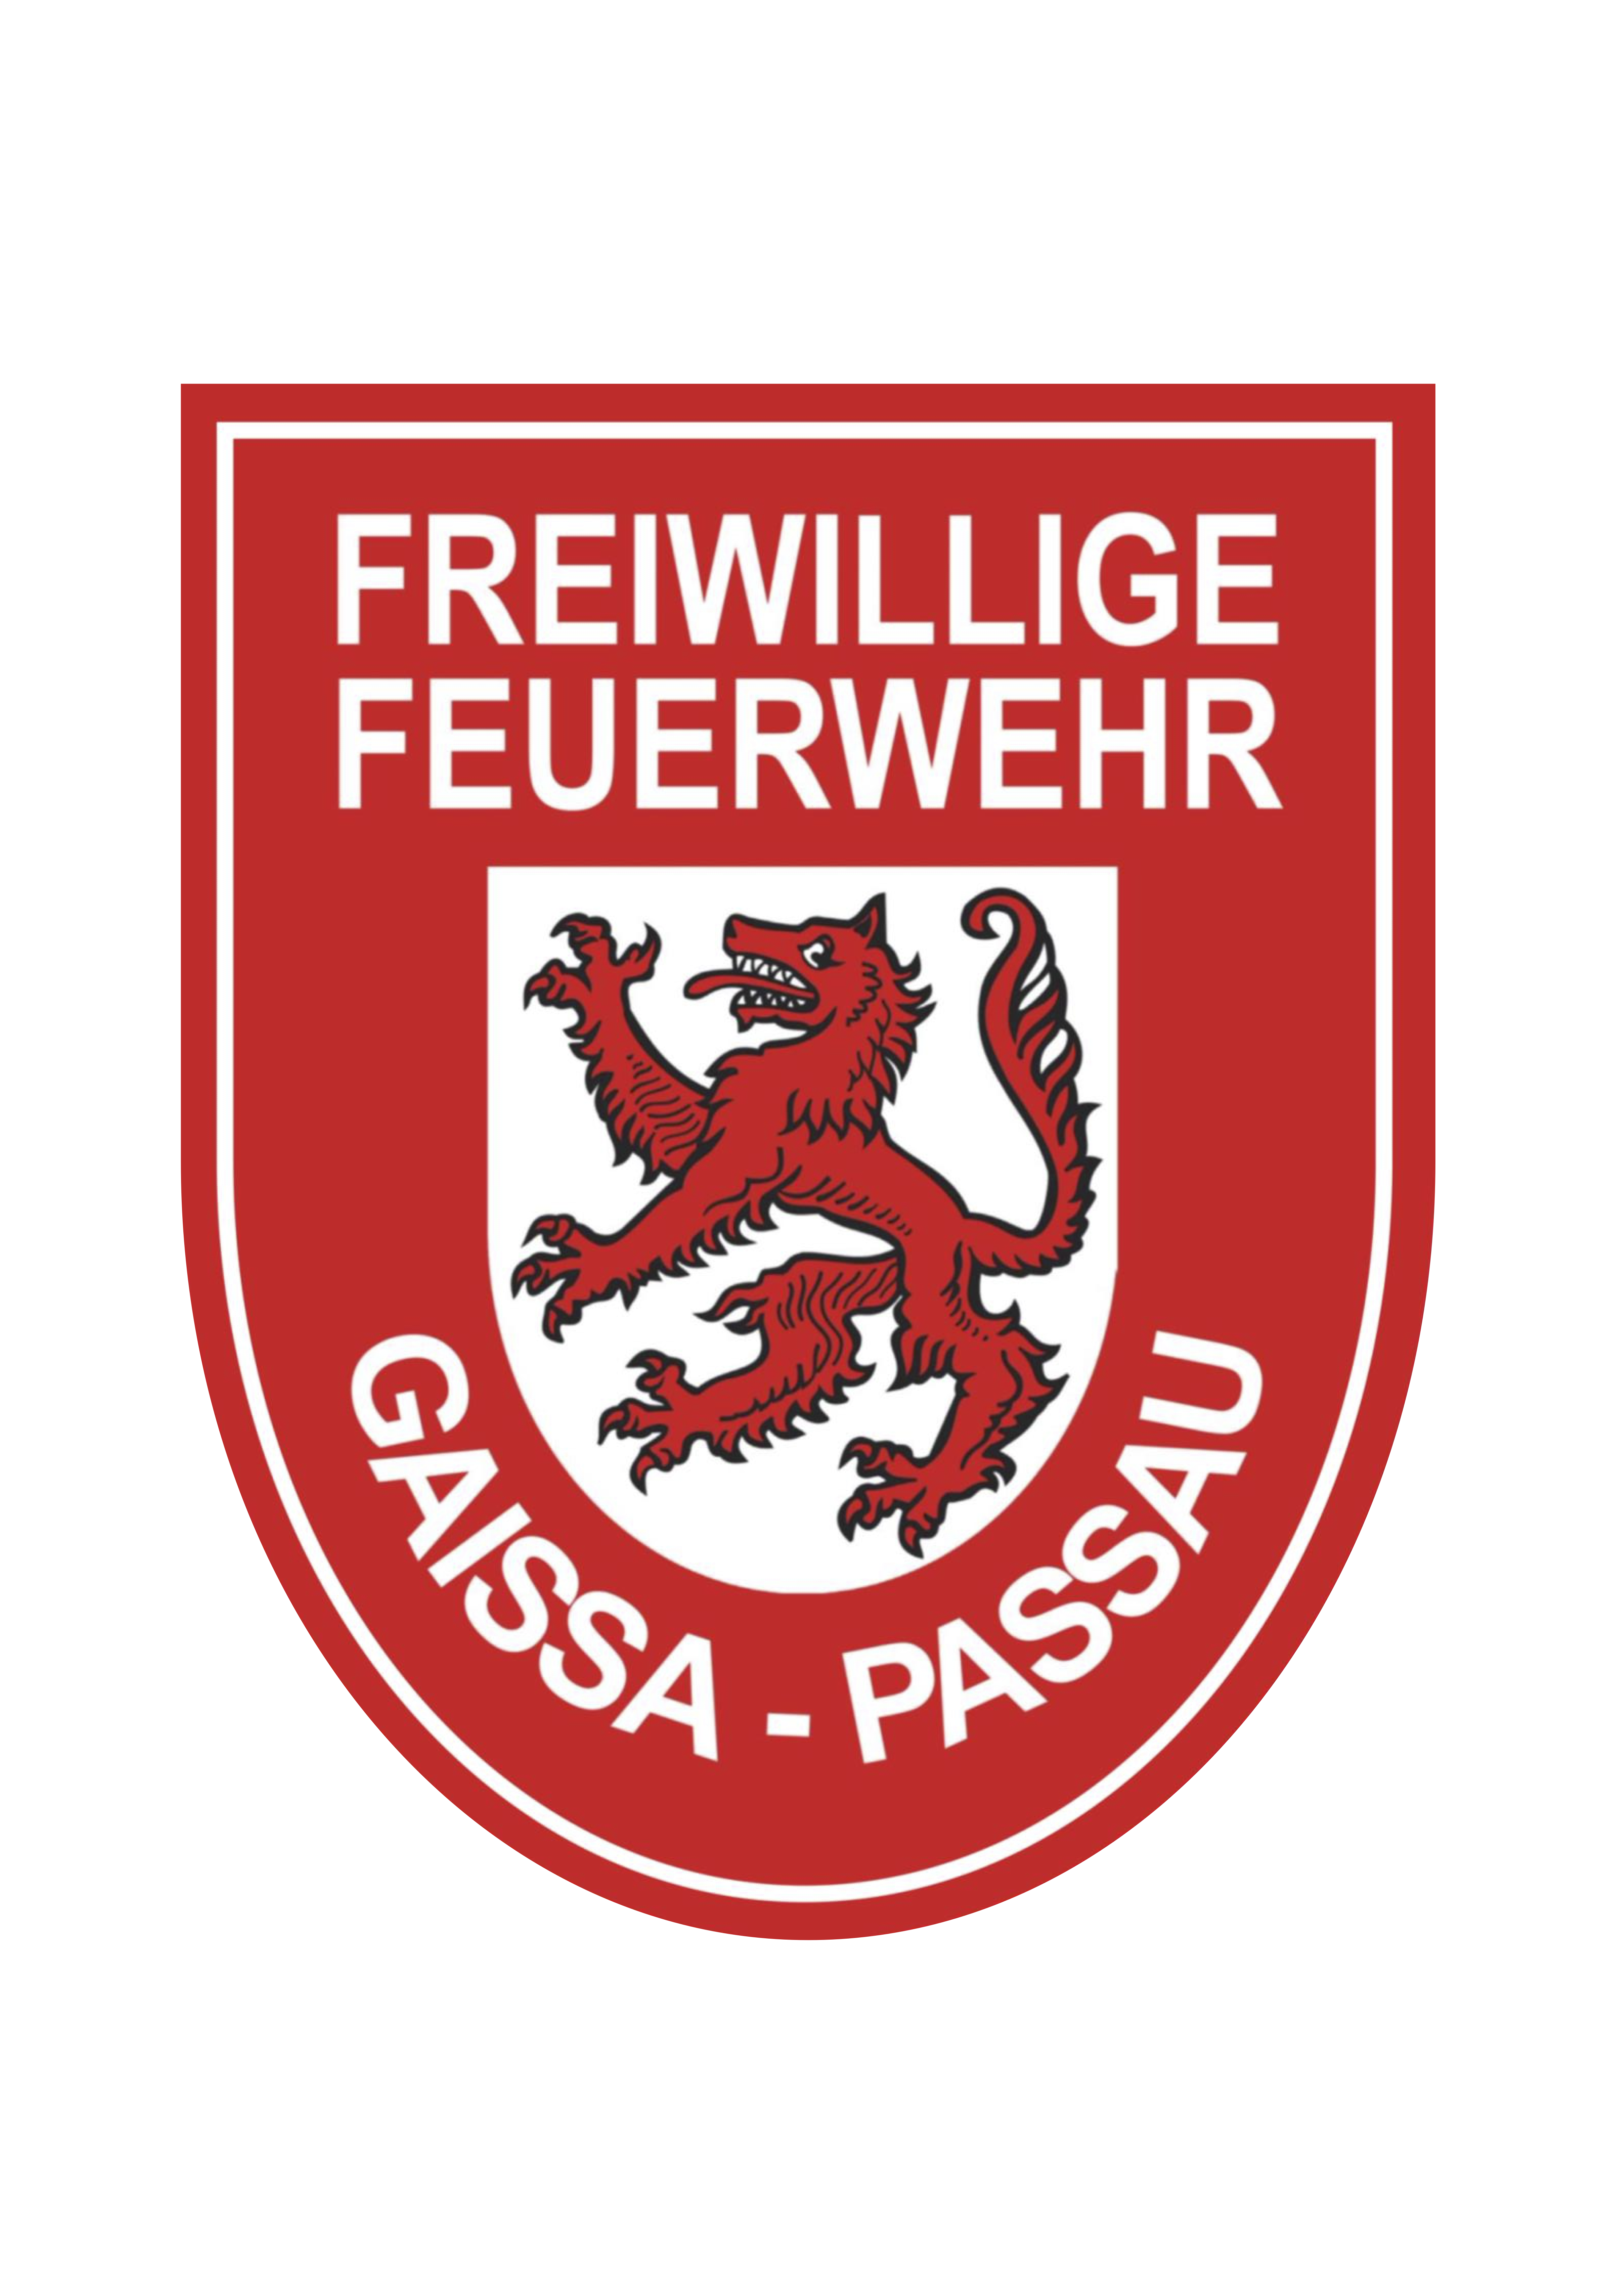 Freiwillige Feuerwehr Gaissa - Passau e.V.